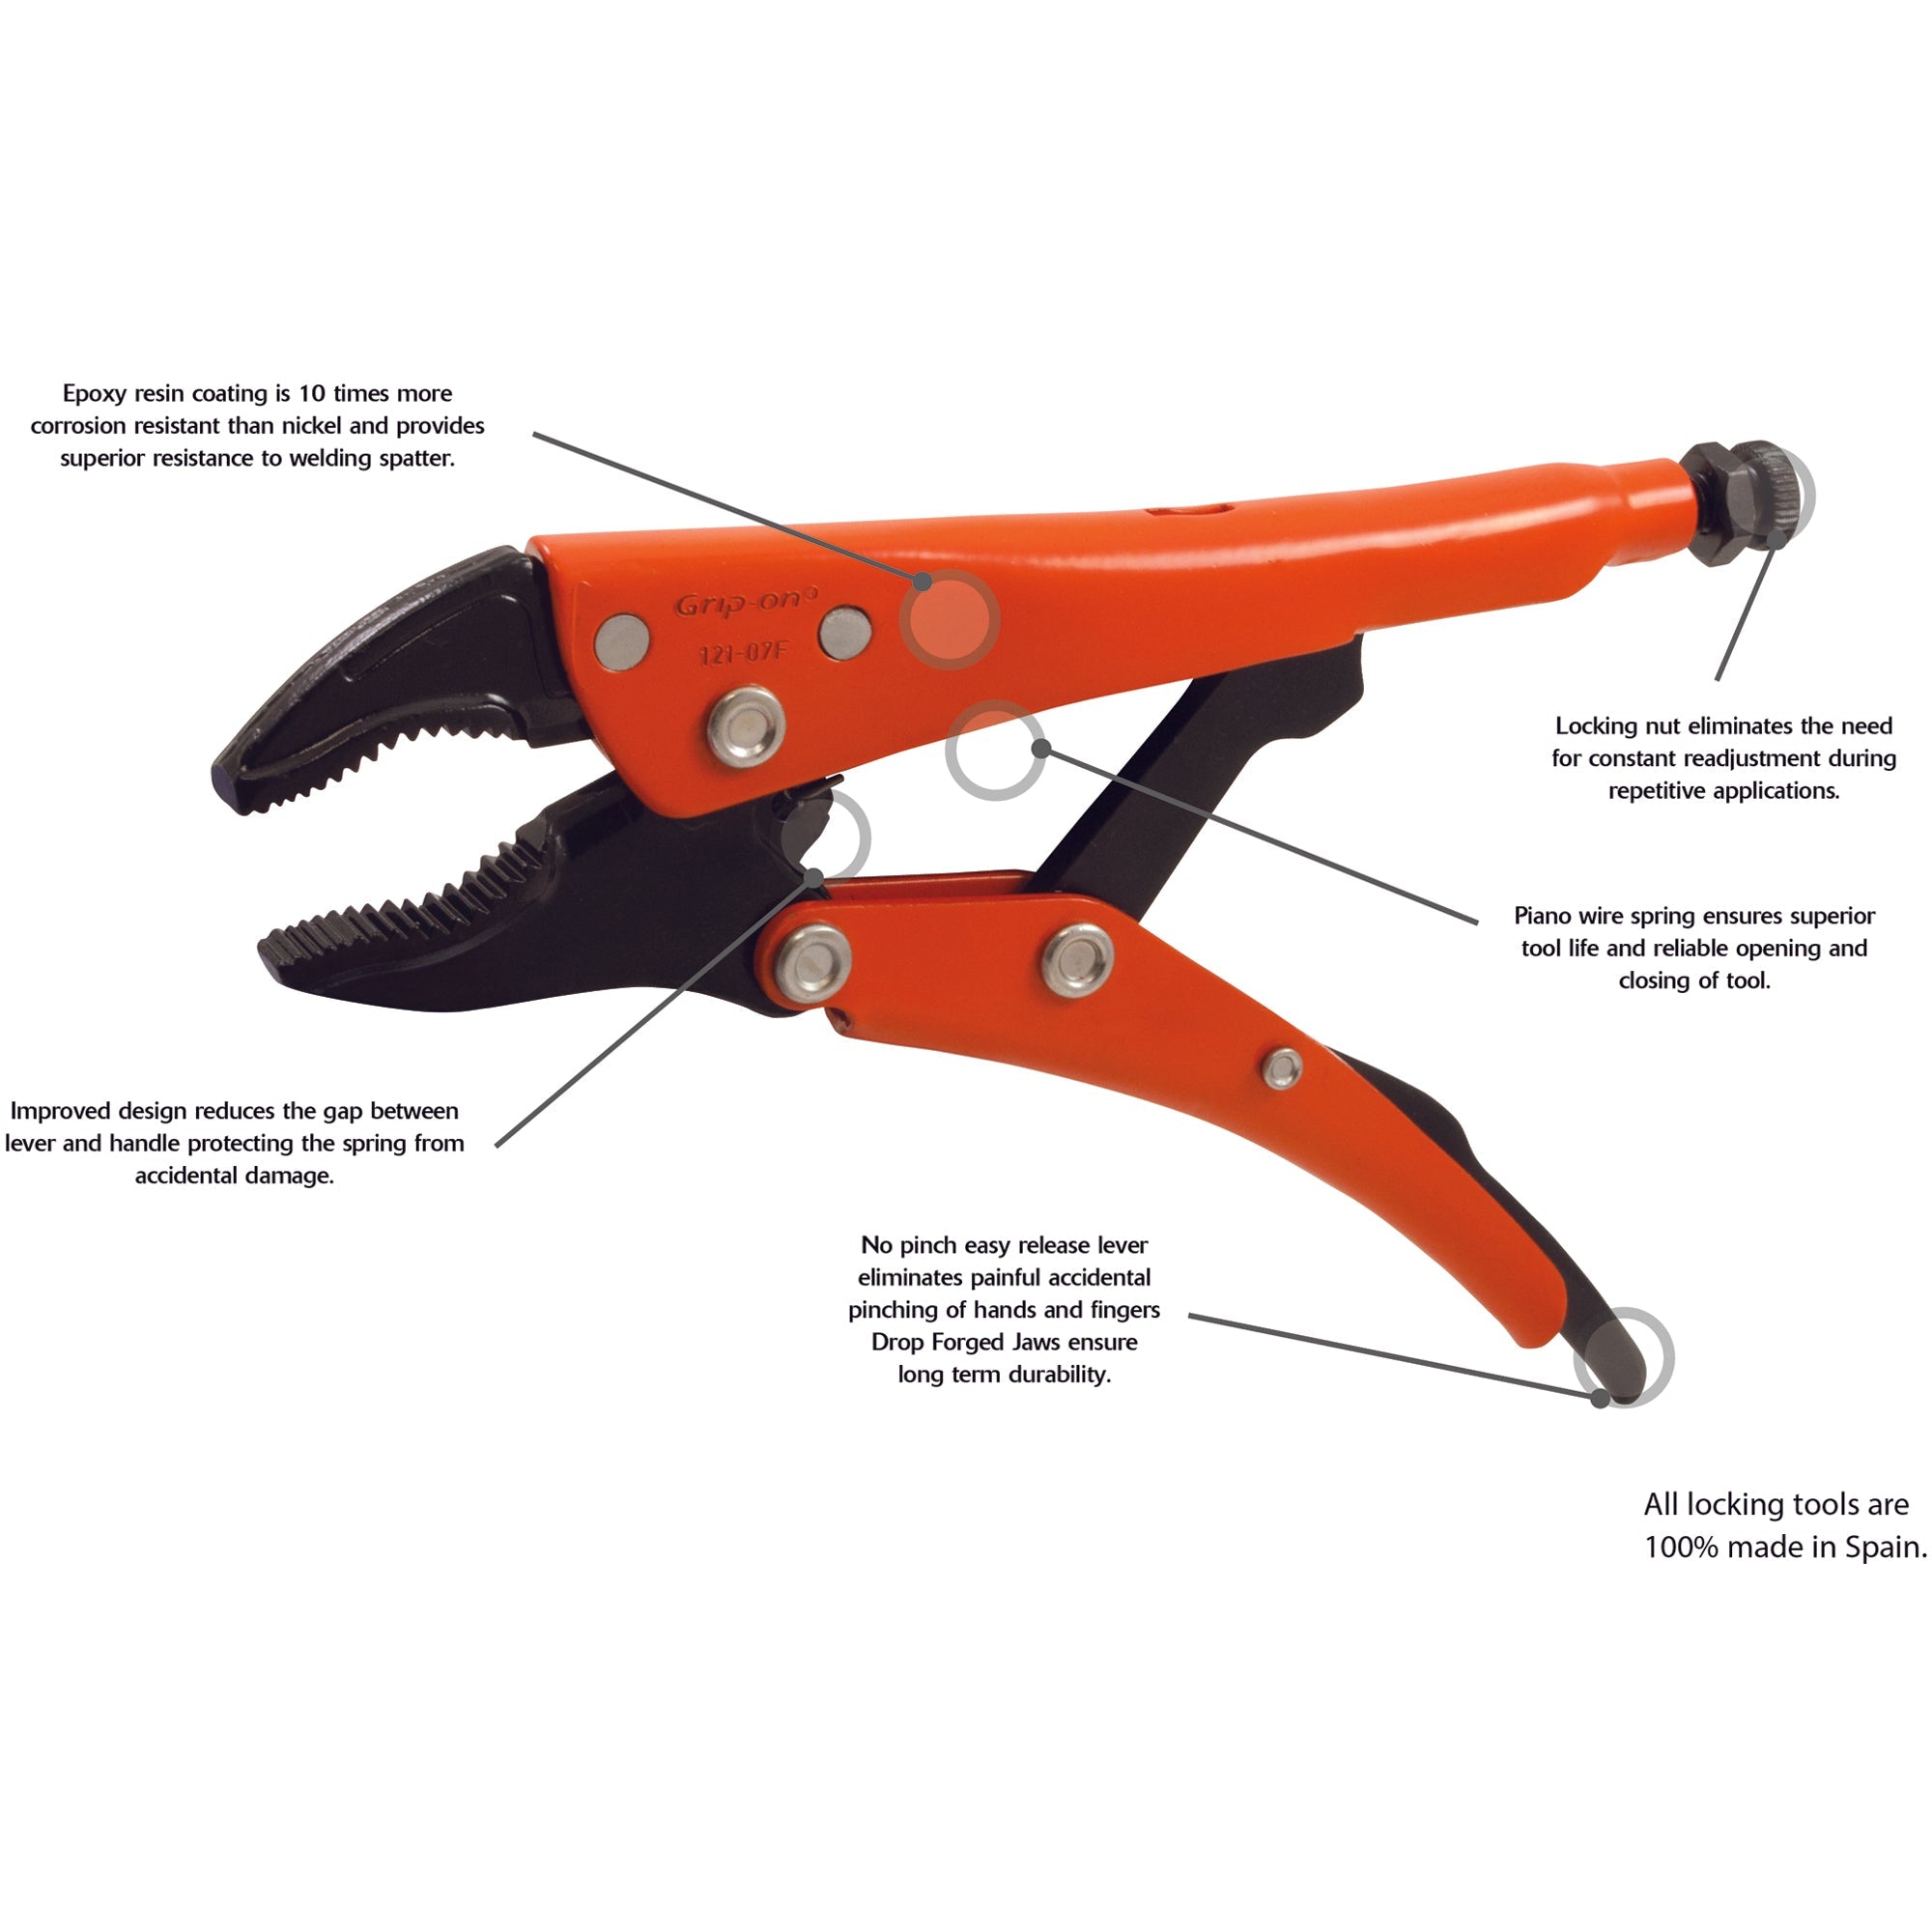 Grip-on® Plugweld Locking Pliers – Gray Tools Online Store